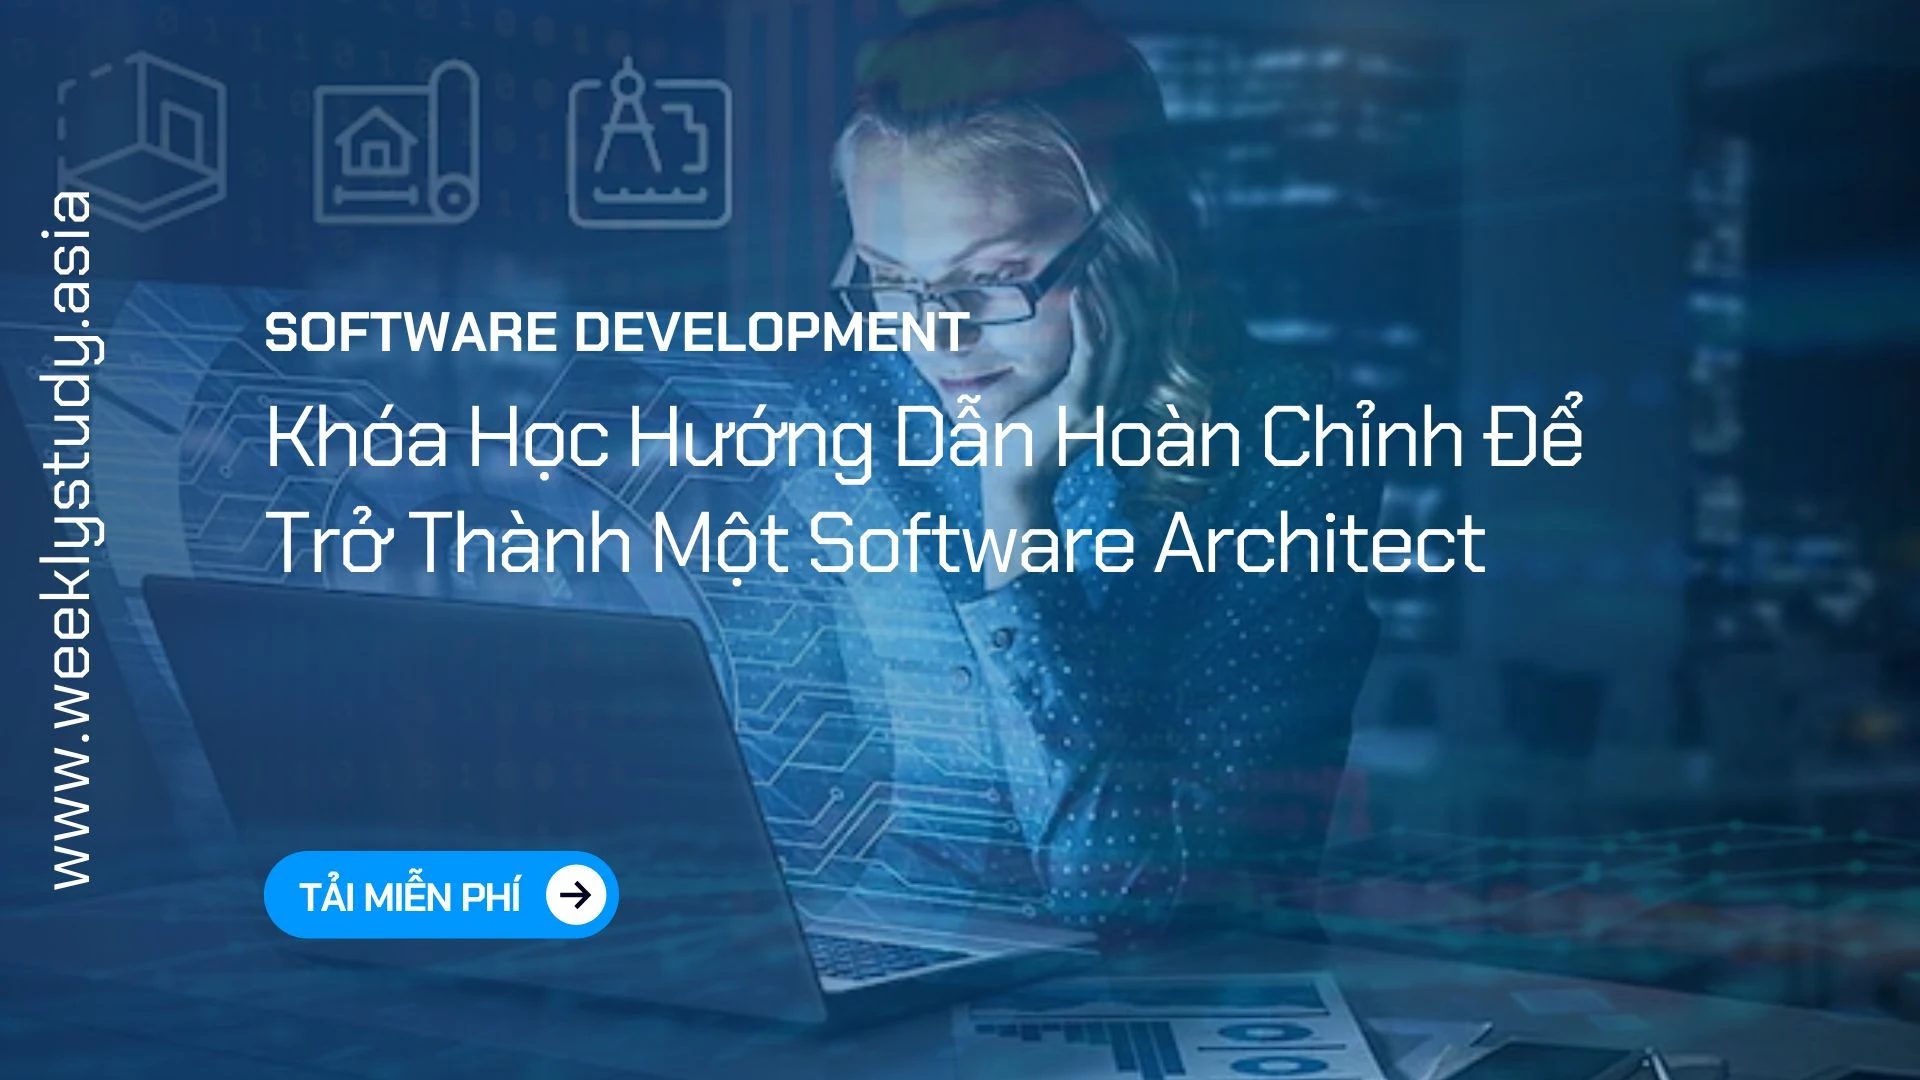 gioi-thieu-khoa-hoc-huong-dan-hoan-chinh-de-tro-thanh-mot-software-architect-ma-6968a